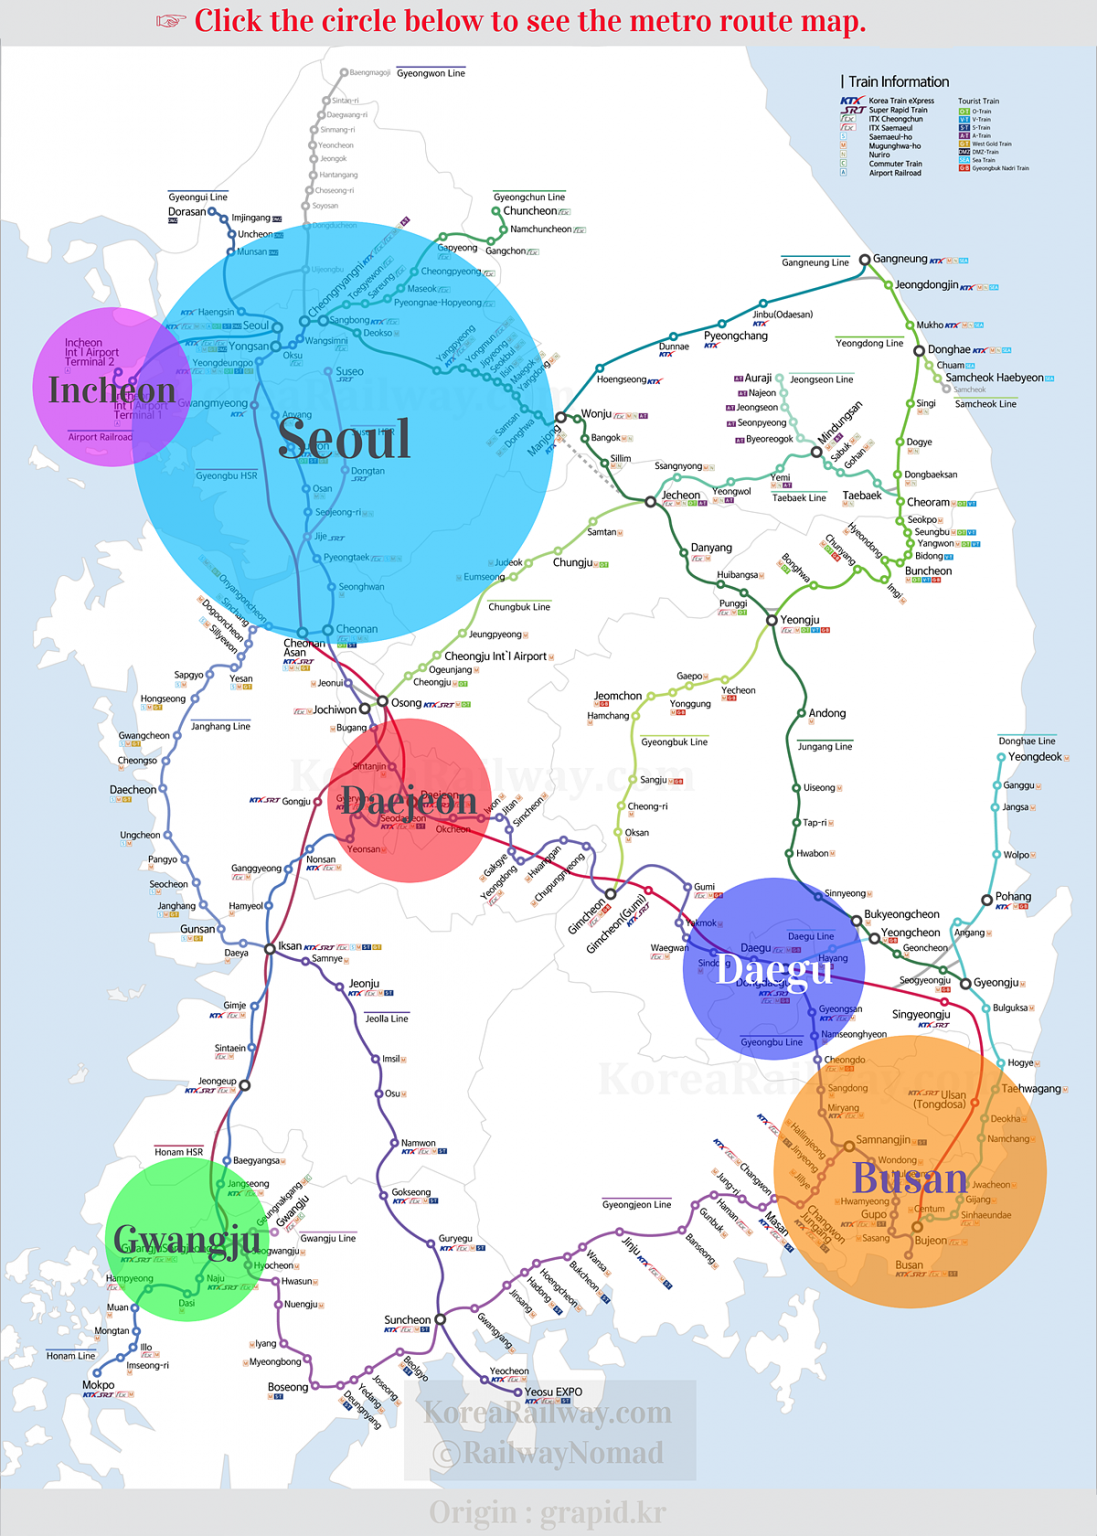 New Korean Metro Map